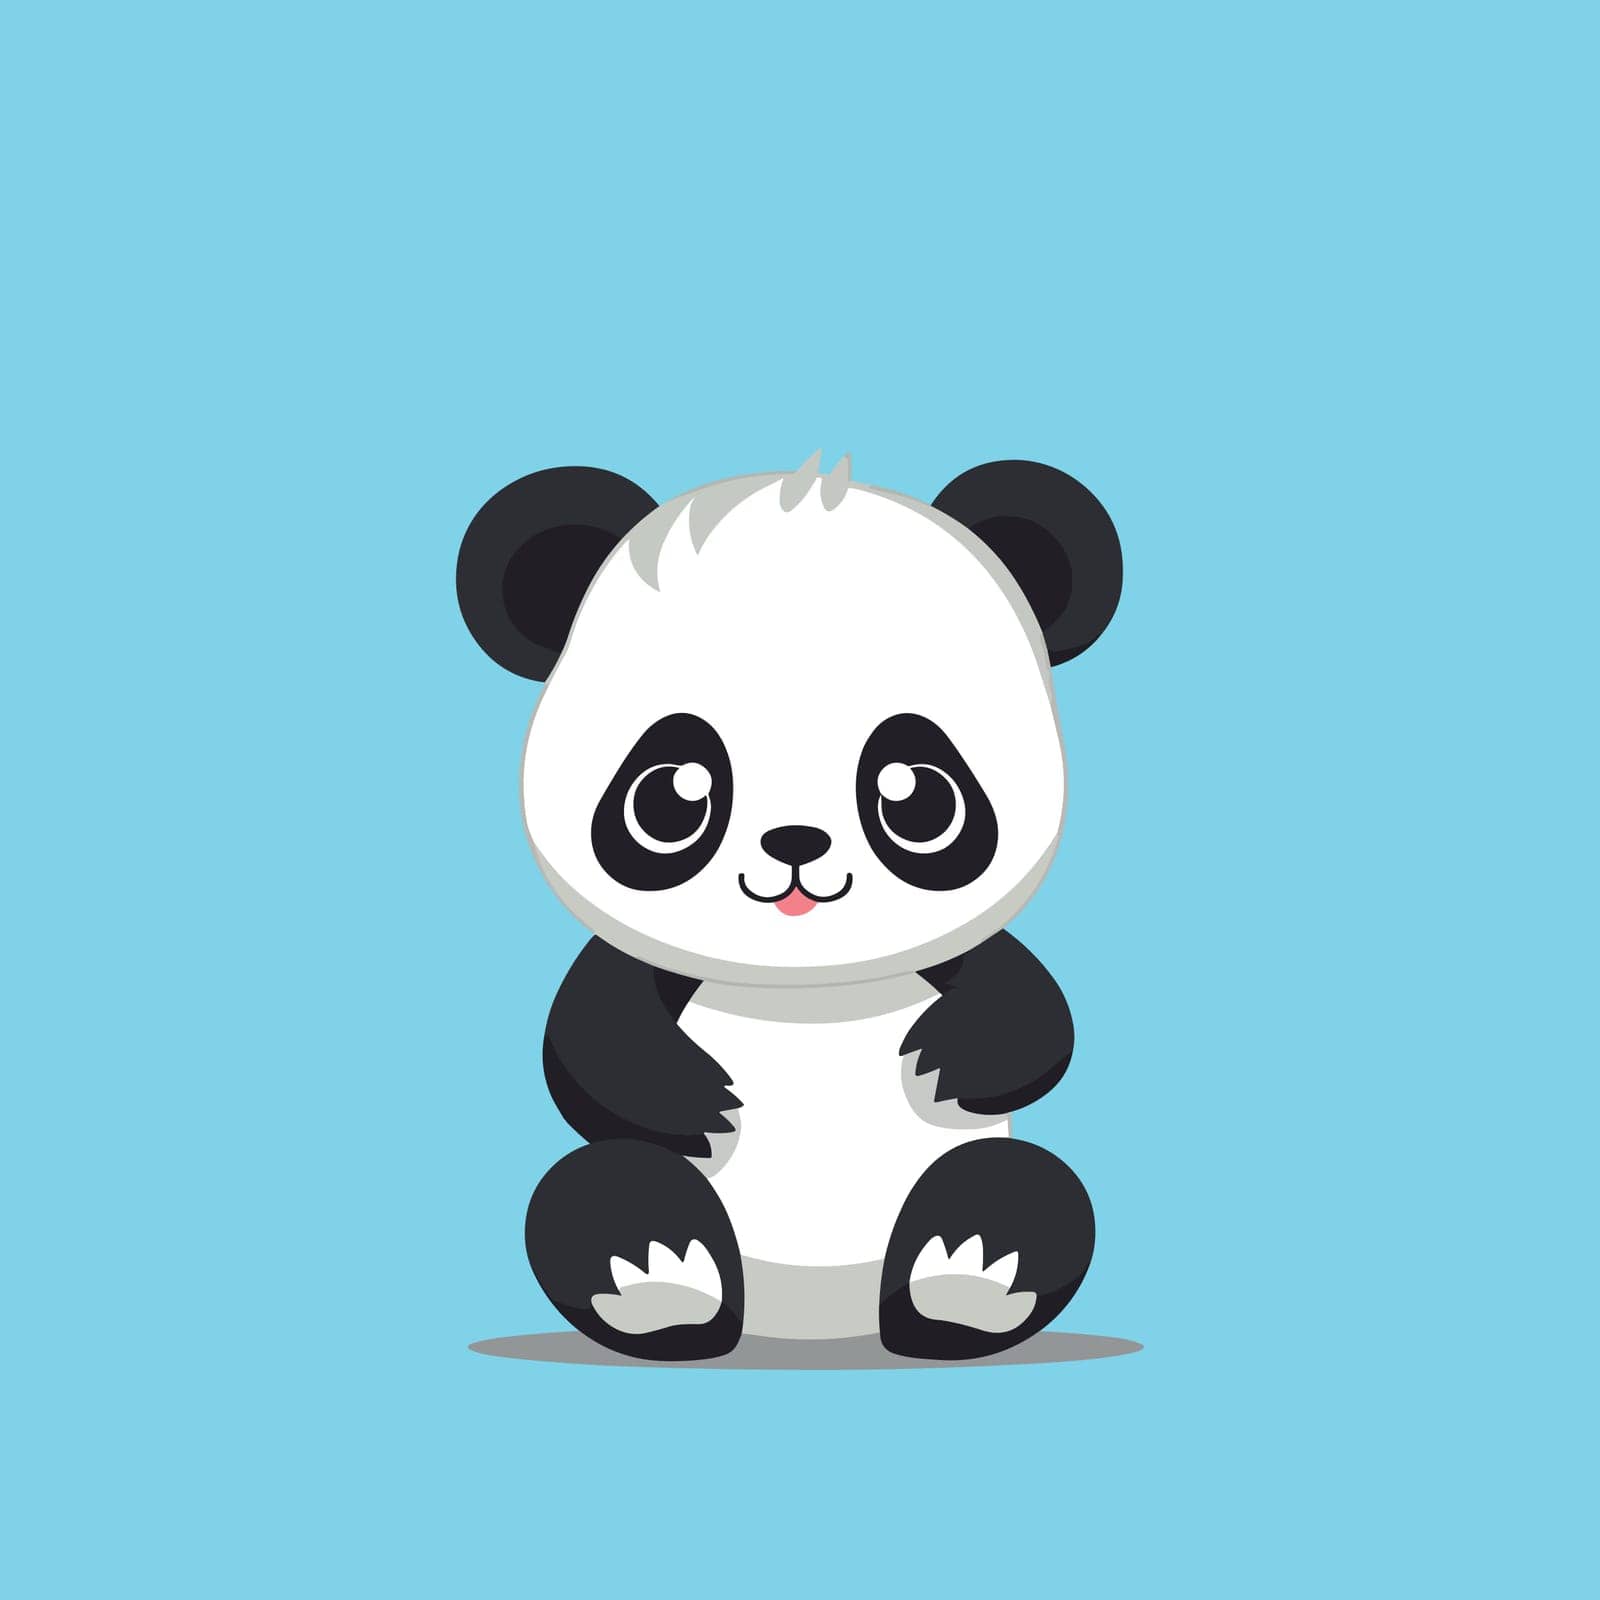 Cartoon cute baby panda sitting by Vinhsino